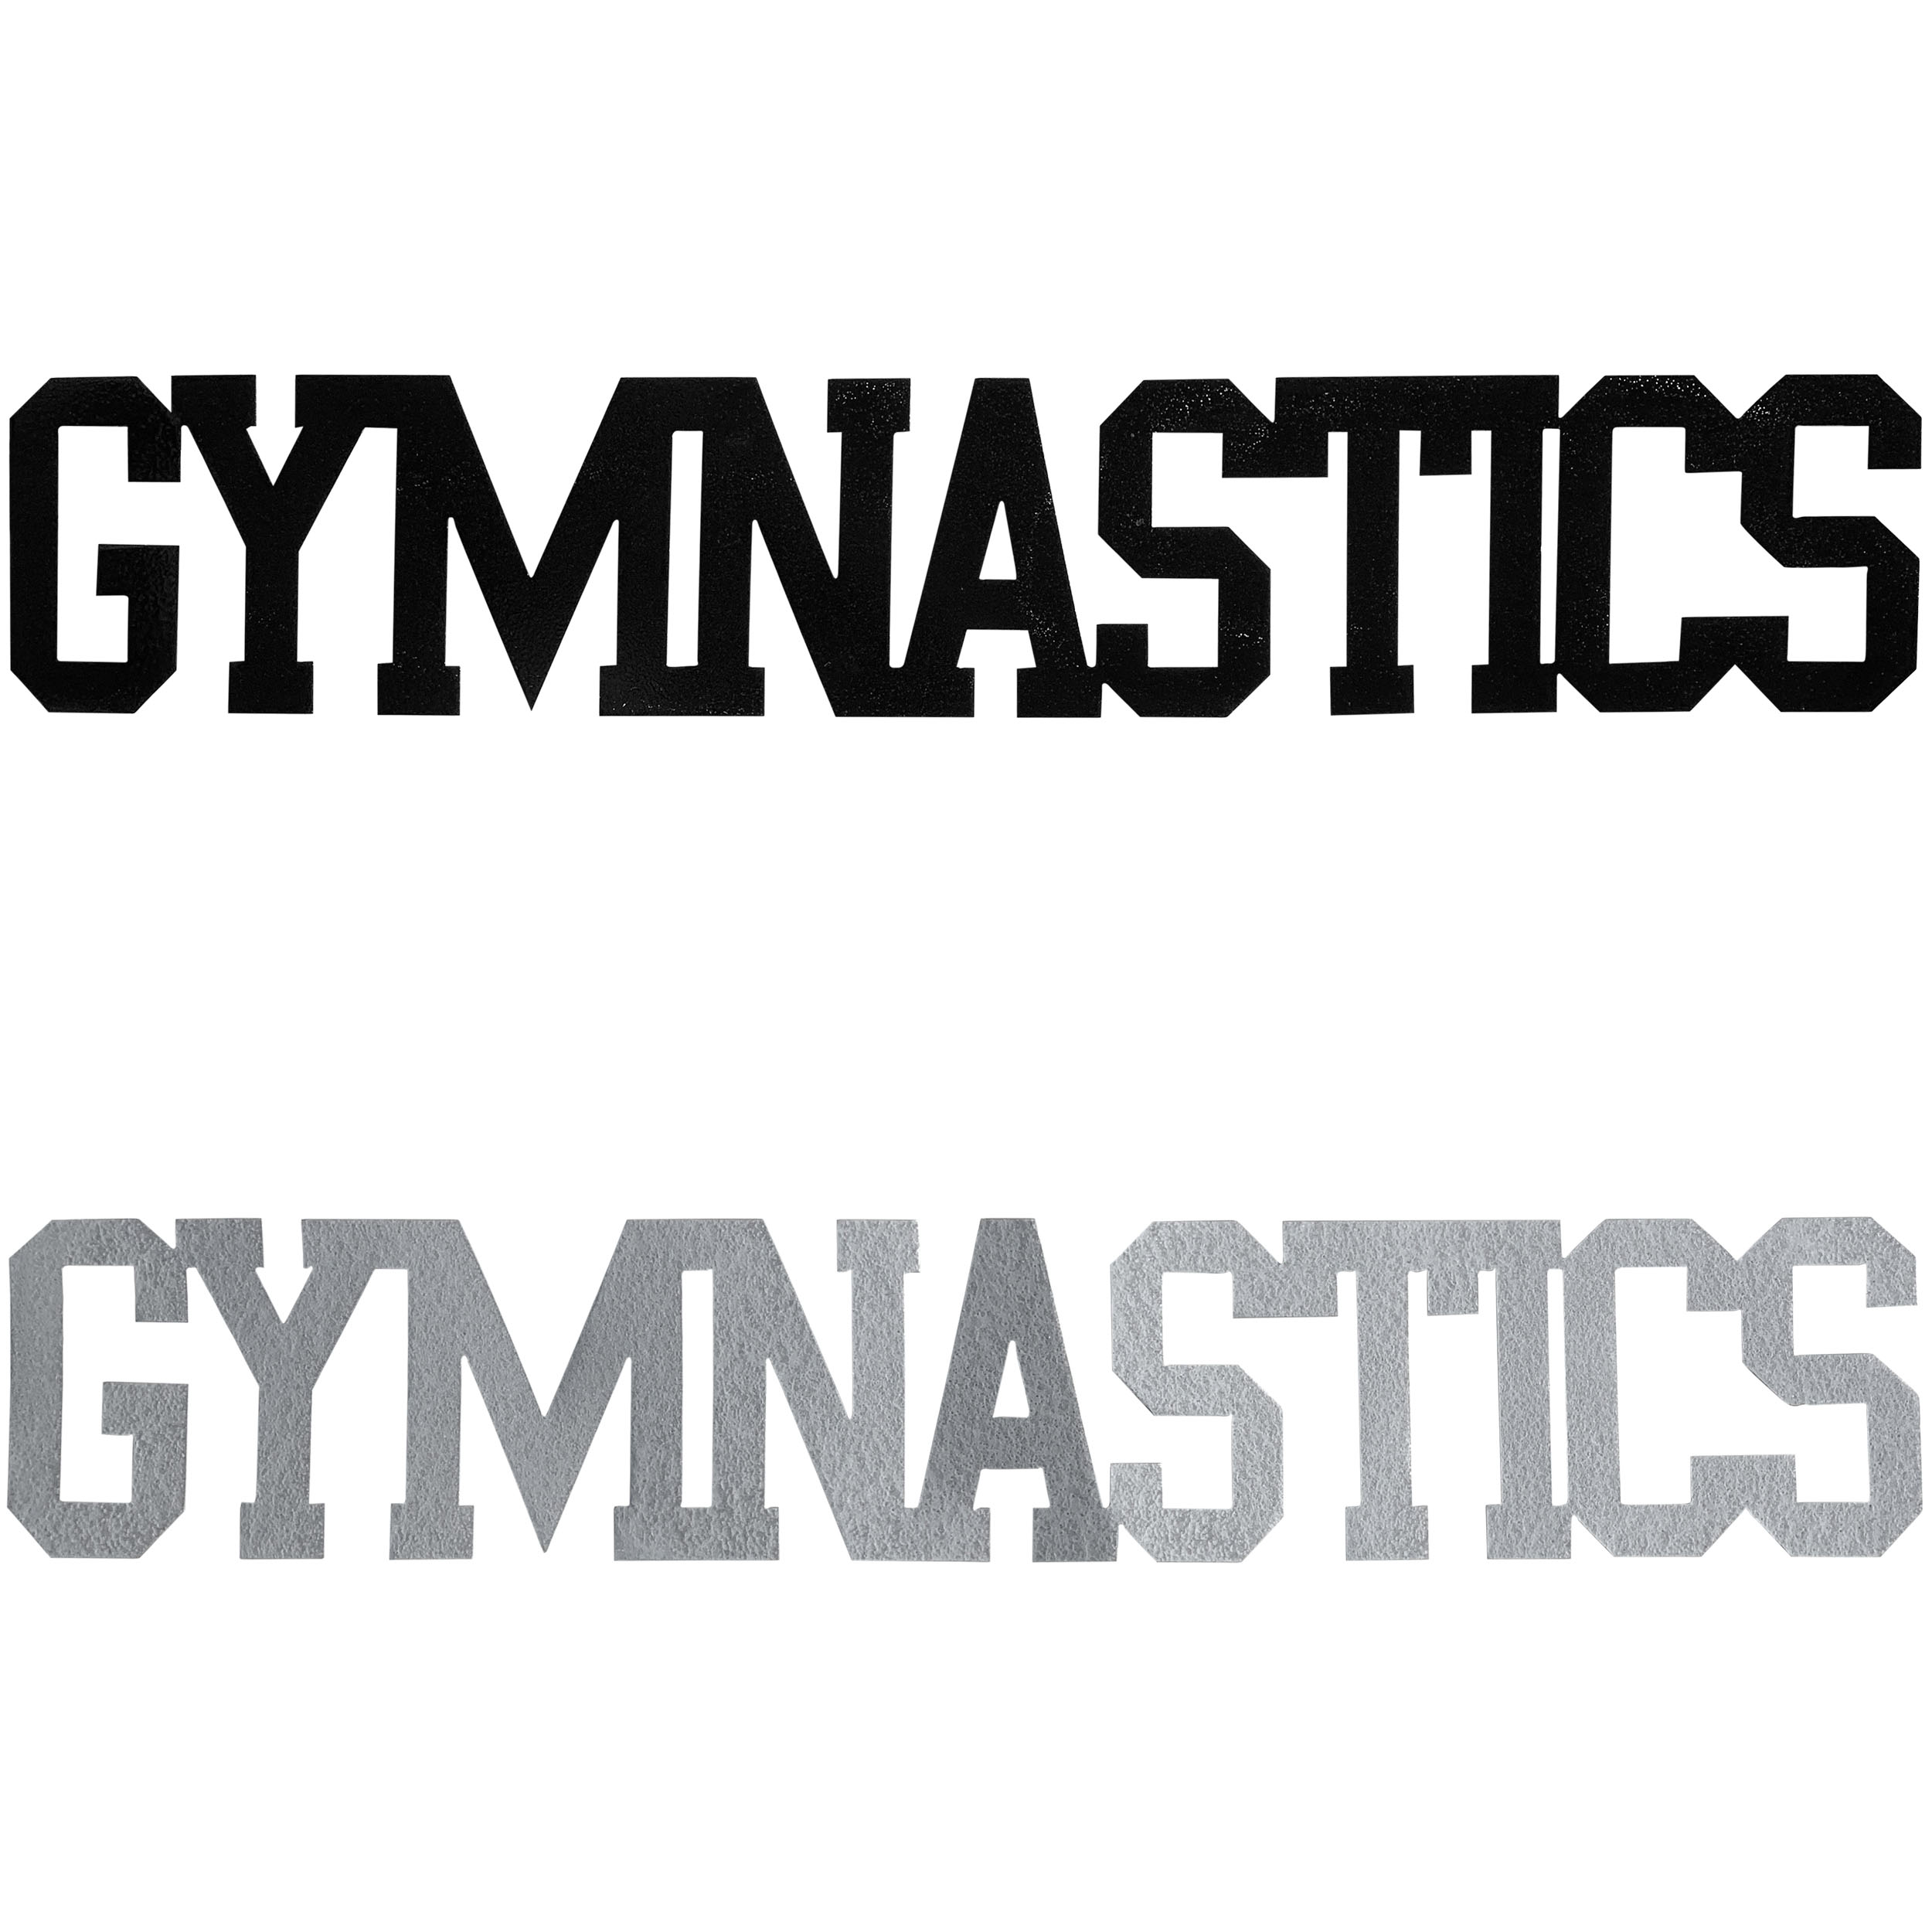 Gymnastics Word by Dugout Creek Designs